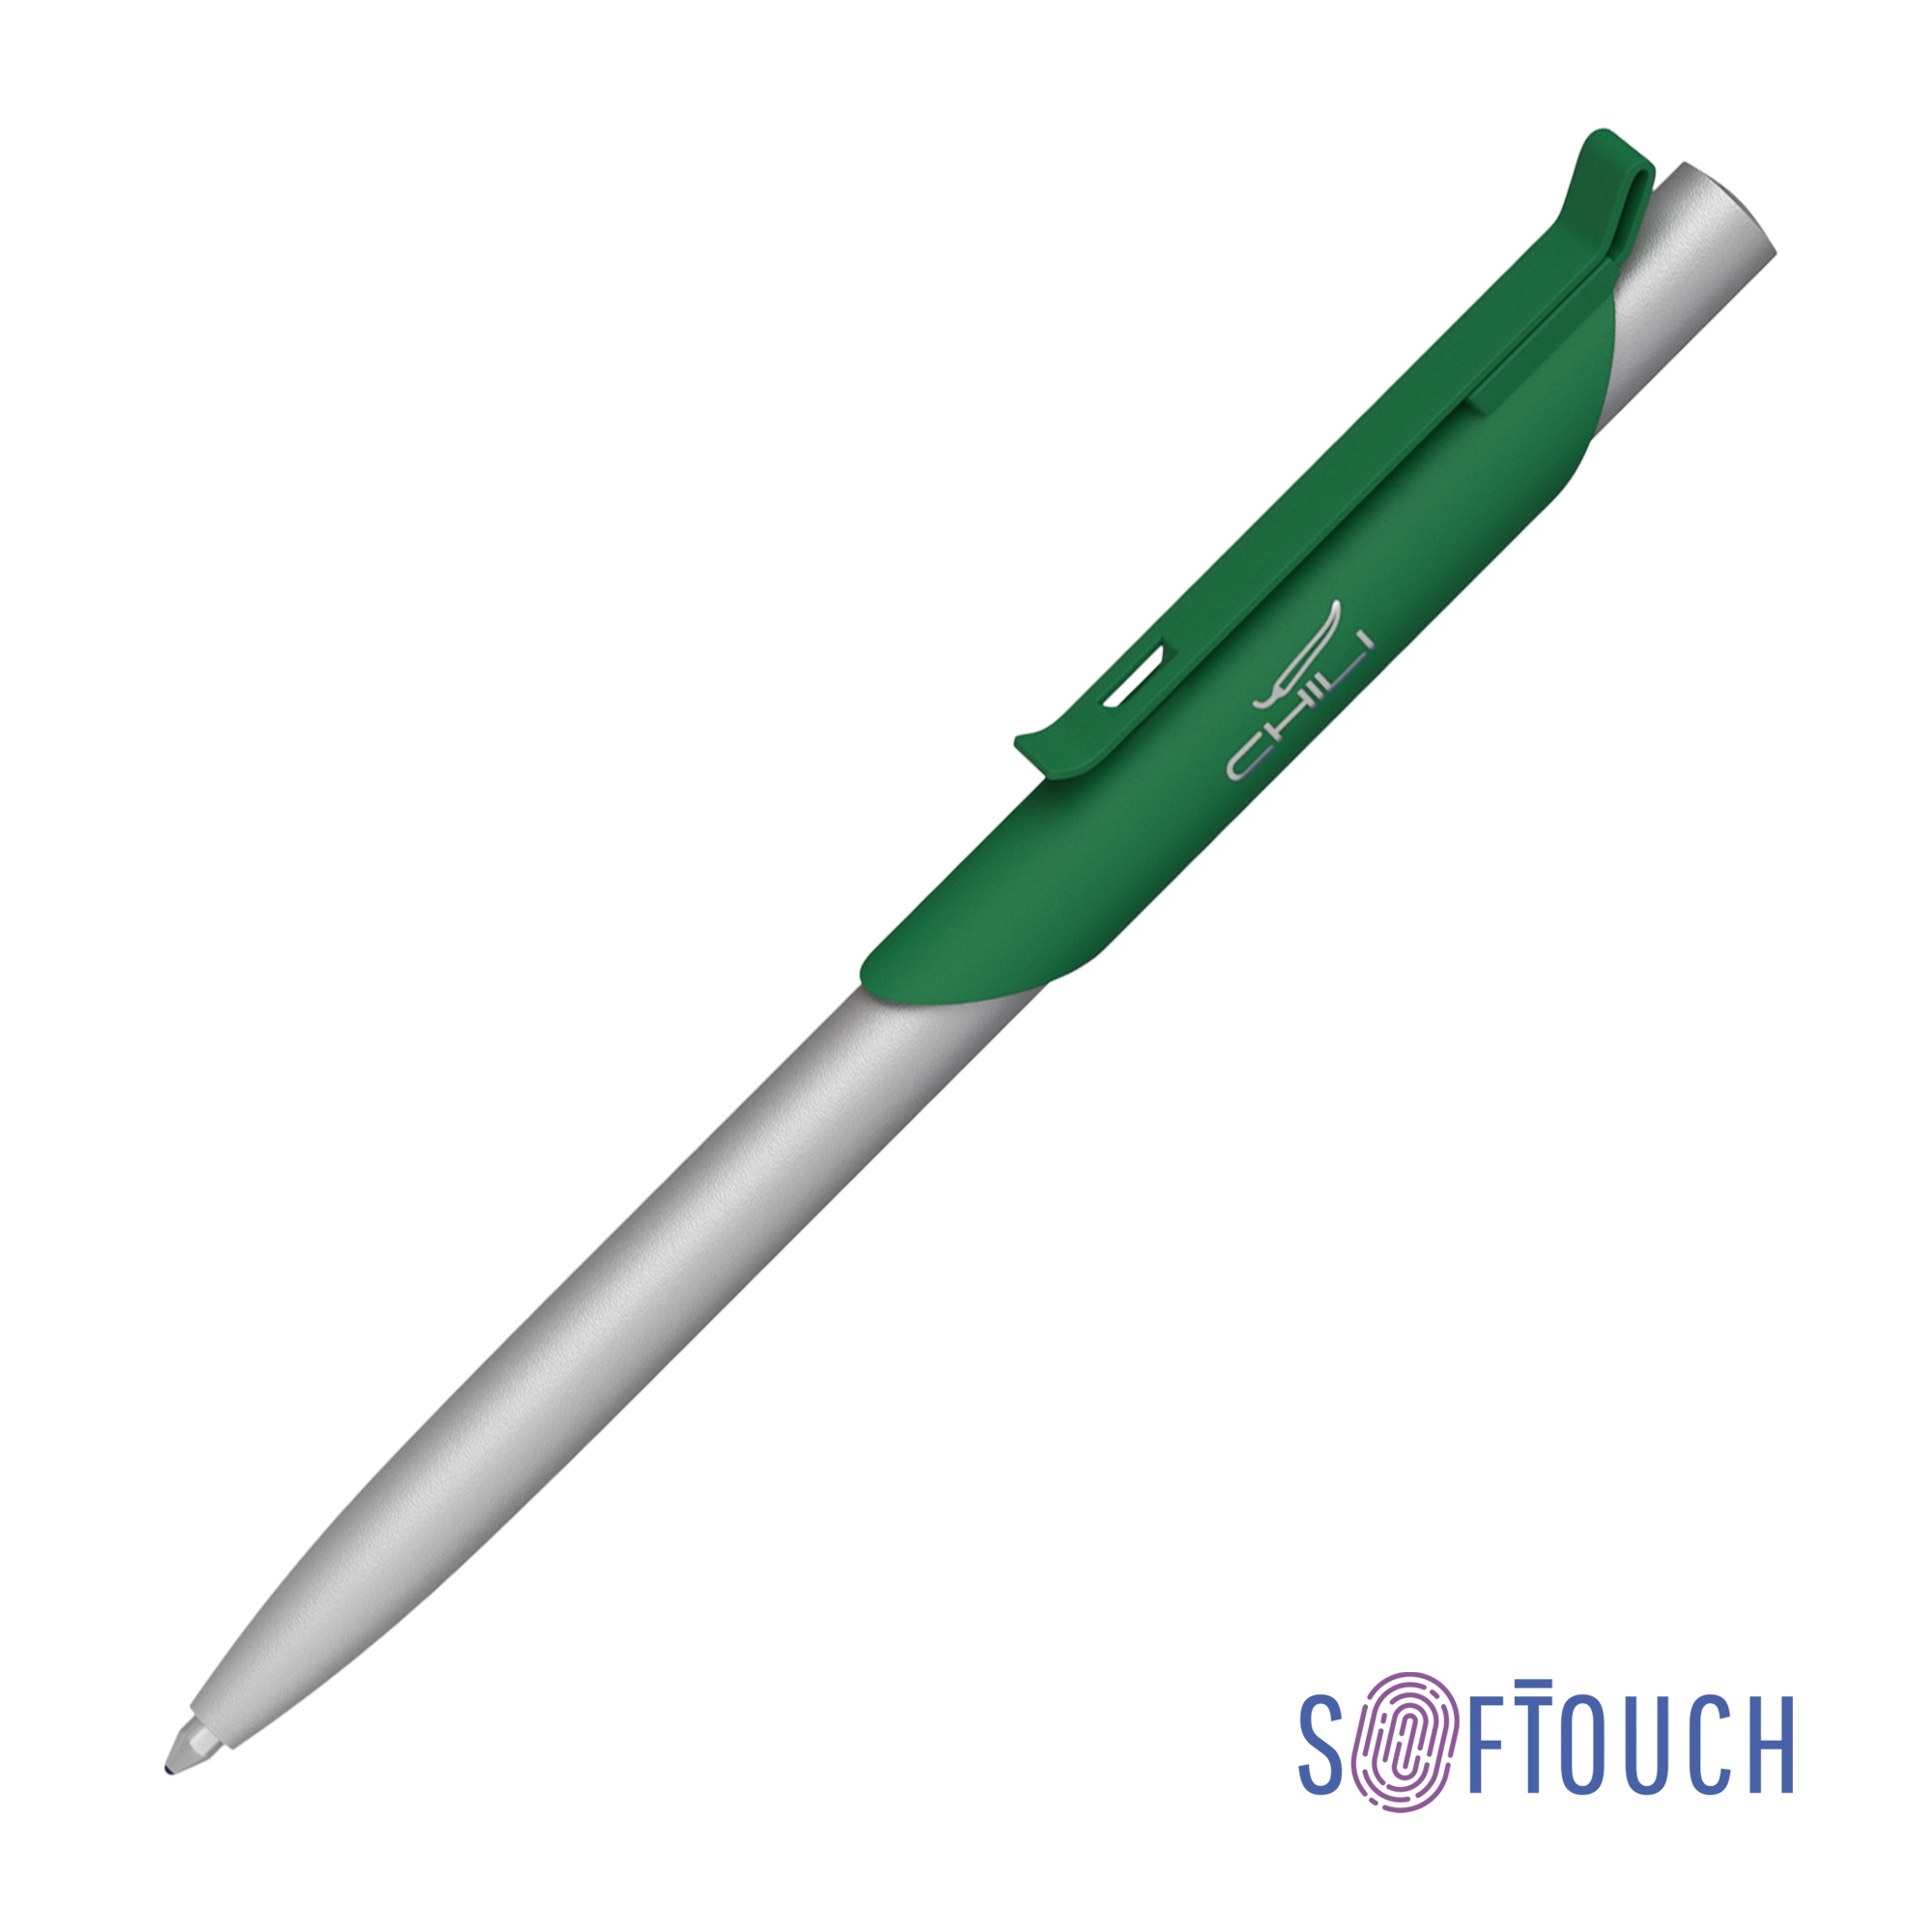 Ручка шариковая "Skil", покрытие soft touch, зеленый, металл/пластик/soft touch